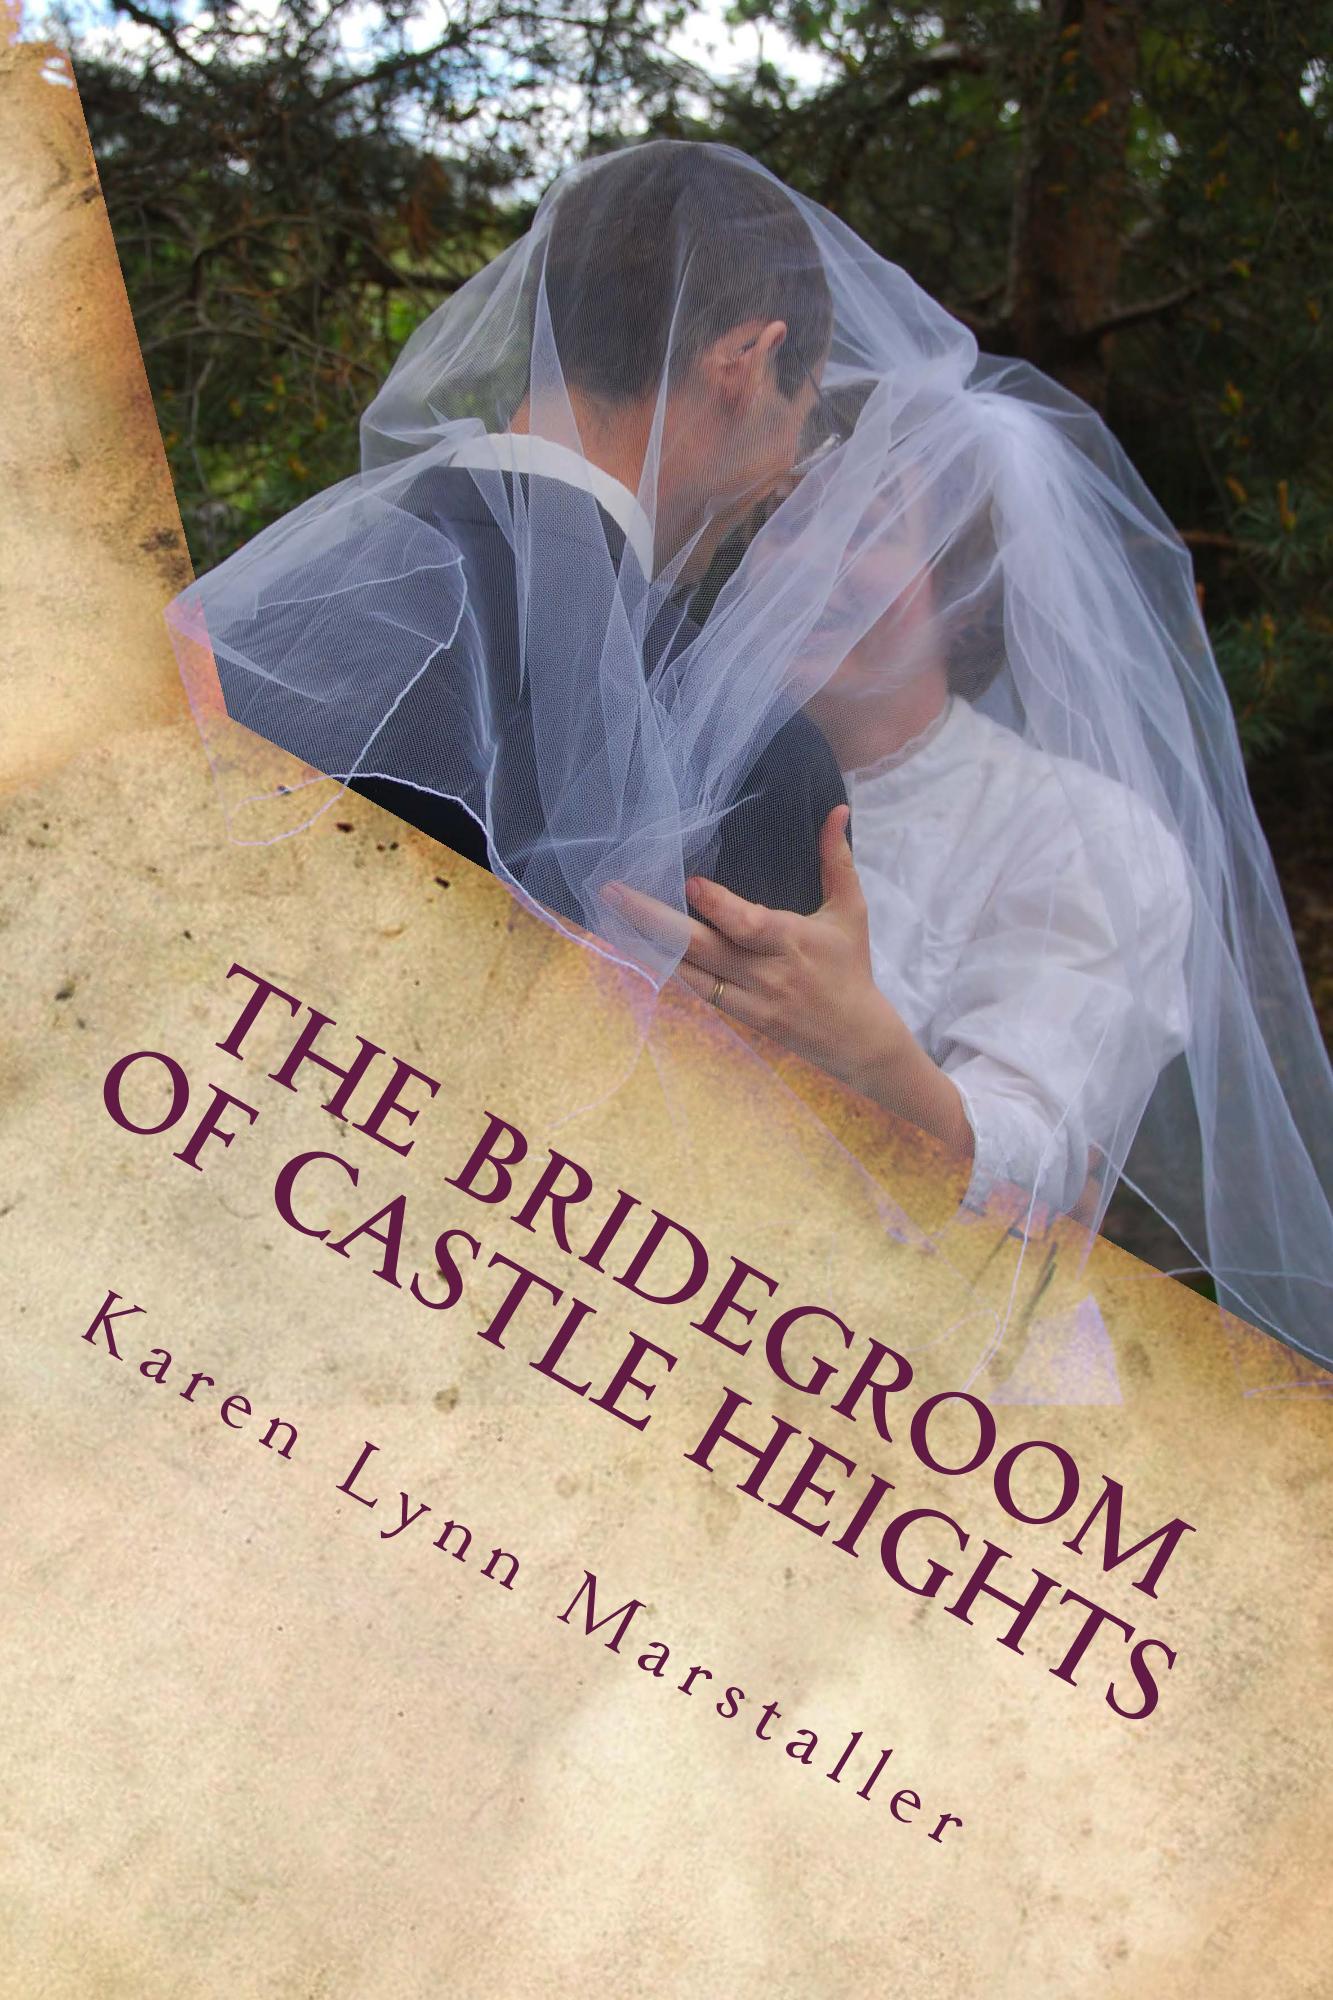 FREE: The Bridegroom of Castle Heights by Karen Marstaller